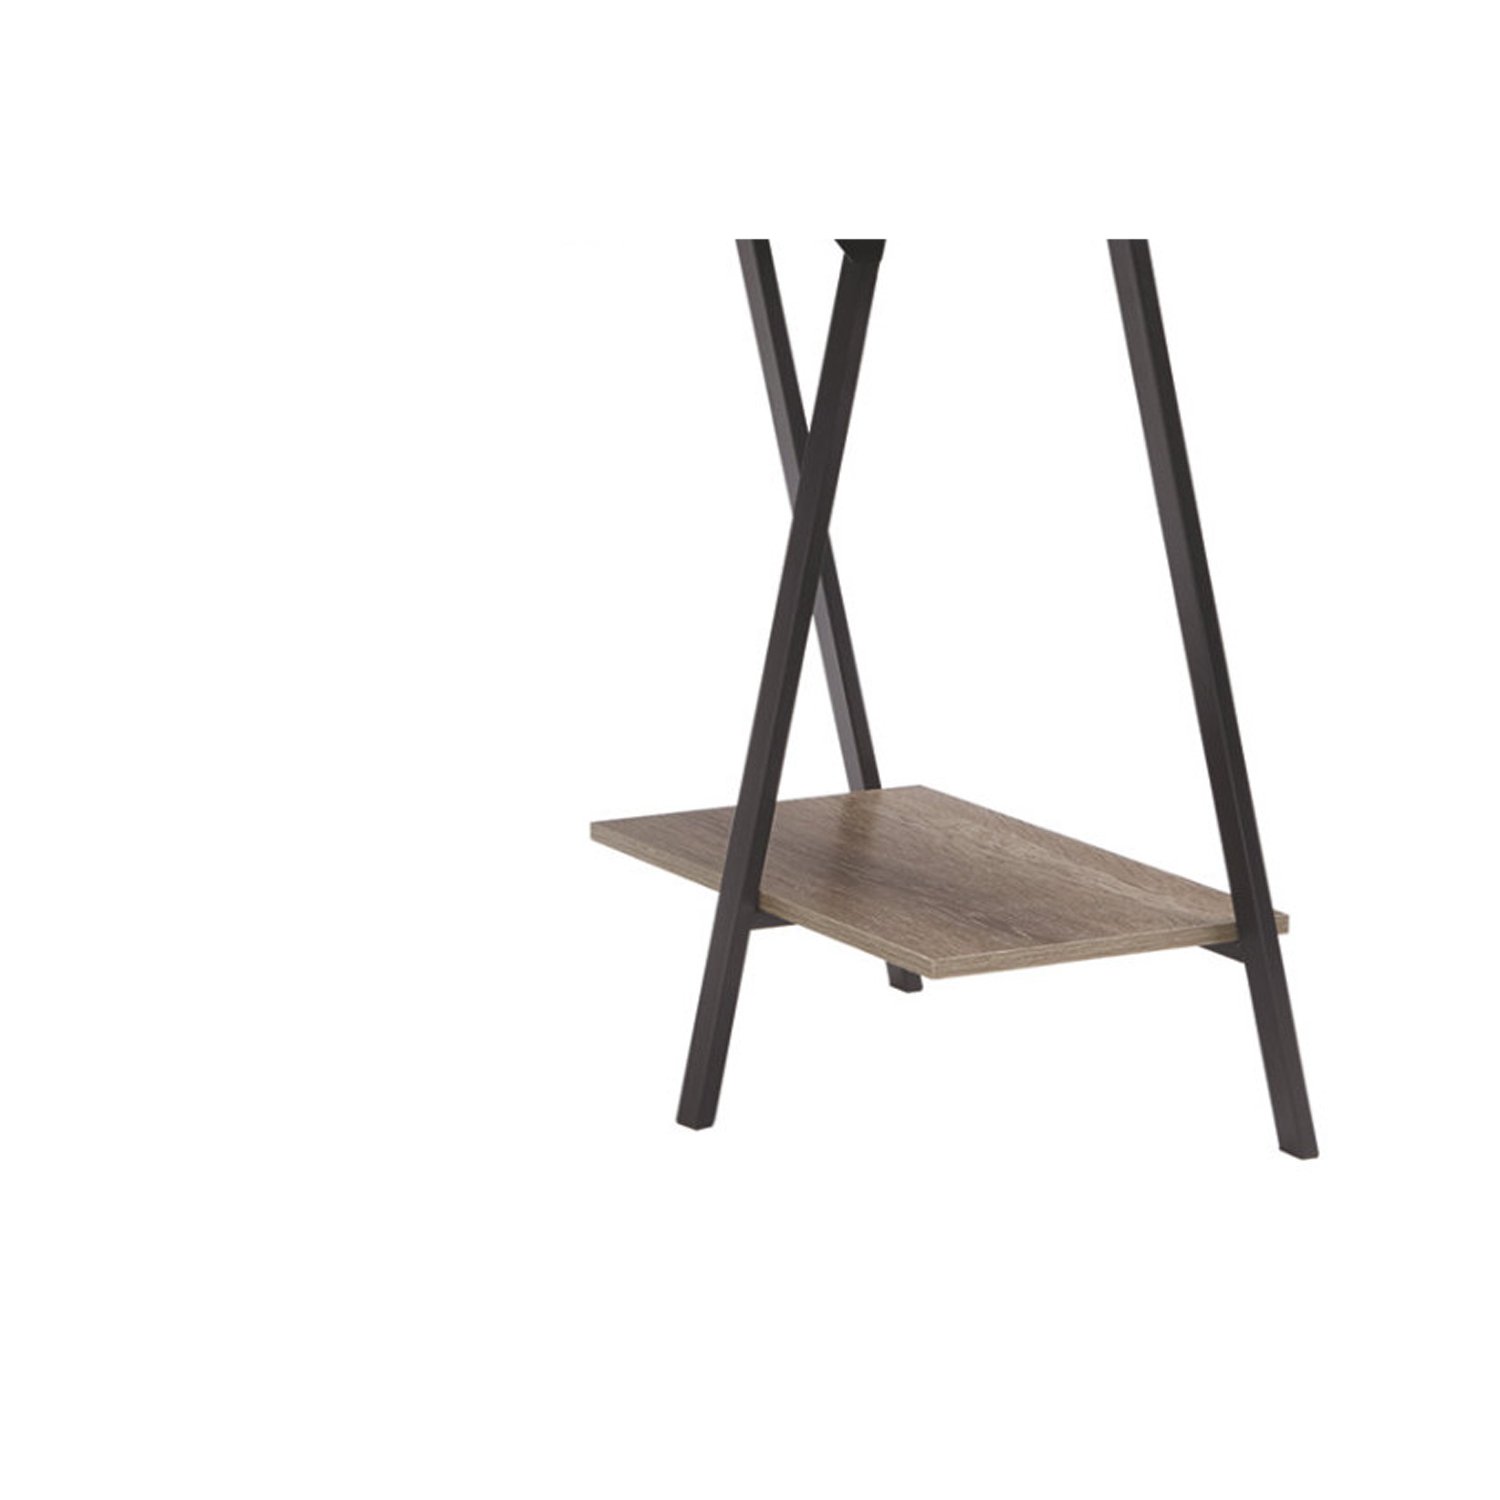 Rectangular Wood And Metal Desk With Two Display Shelves, Black And Brown- Saltoro Sherpi